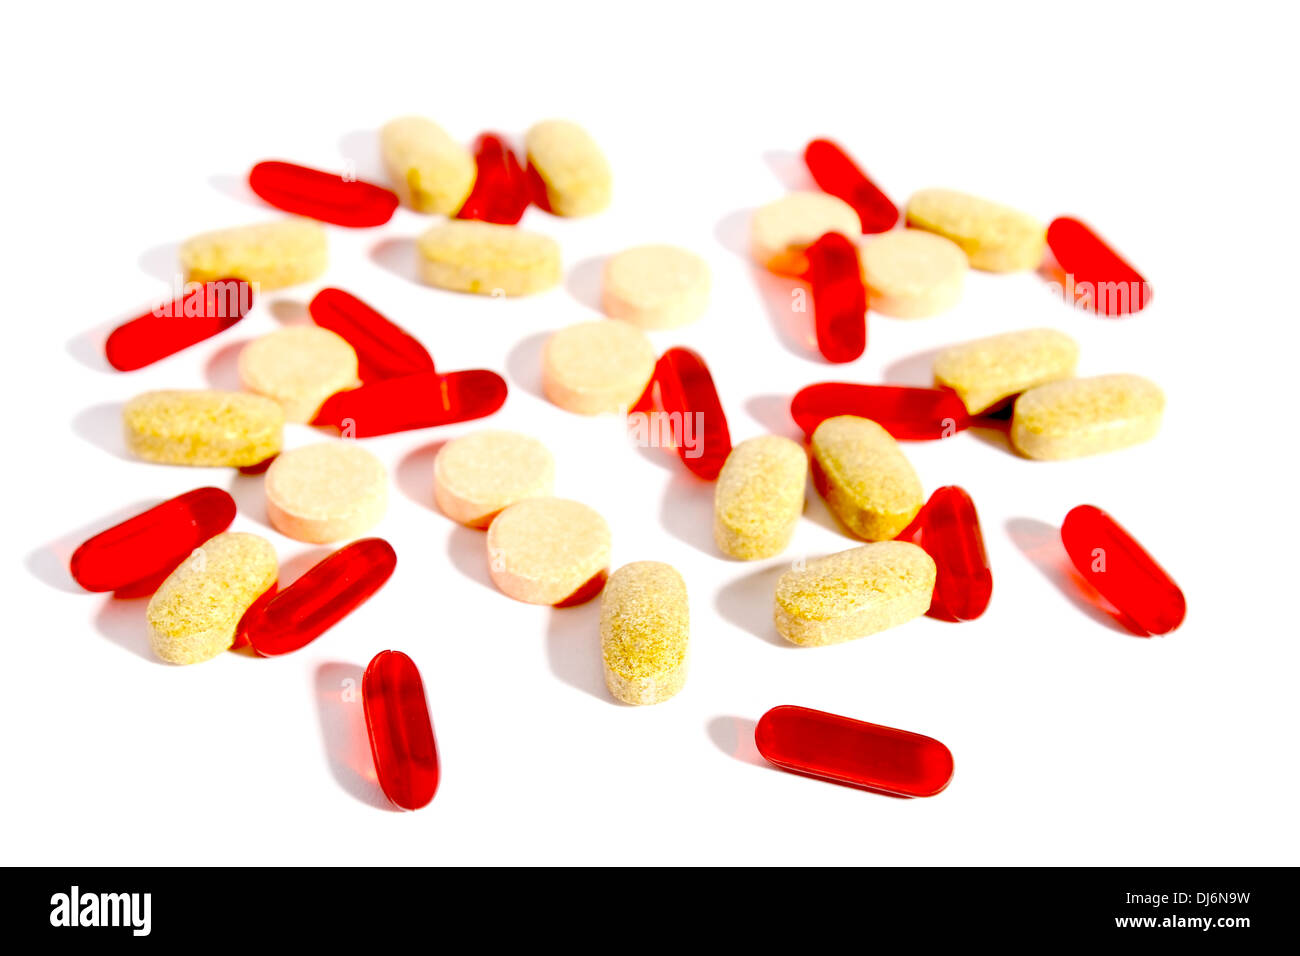 Pillole, vitamine, medicinali, pillole, таблетки, витамины, лекарства, пилюли Foto Stock